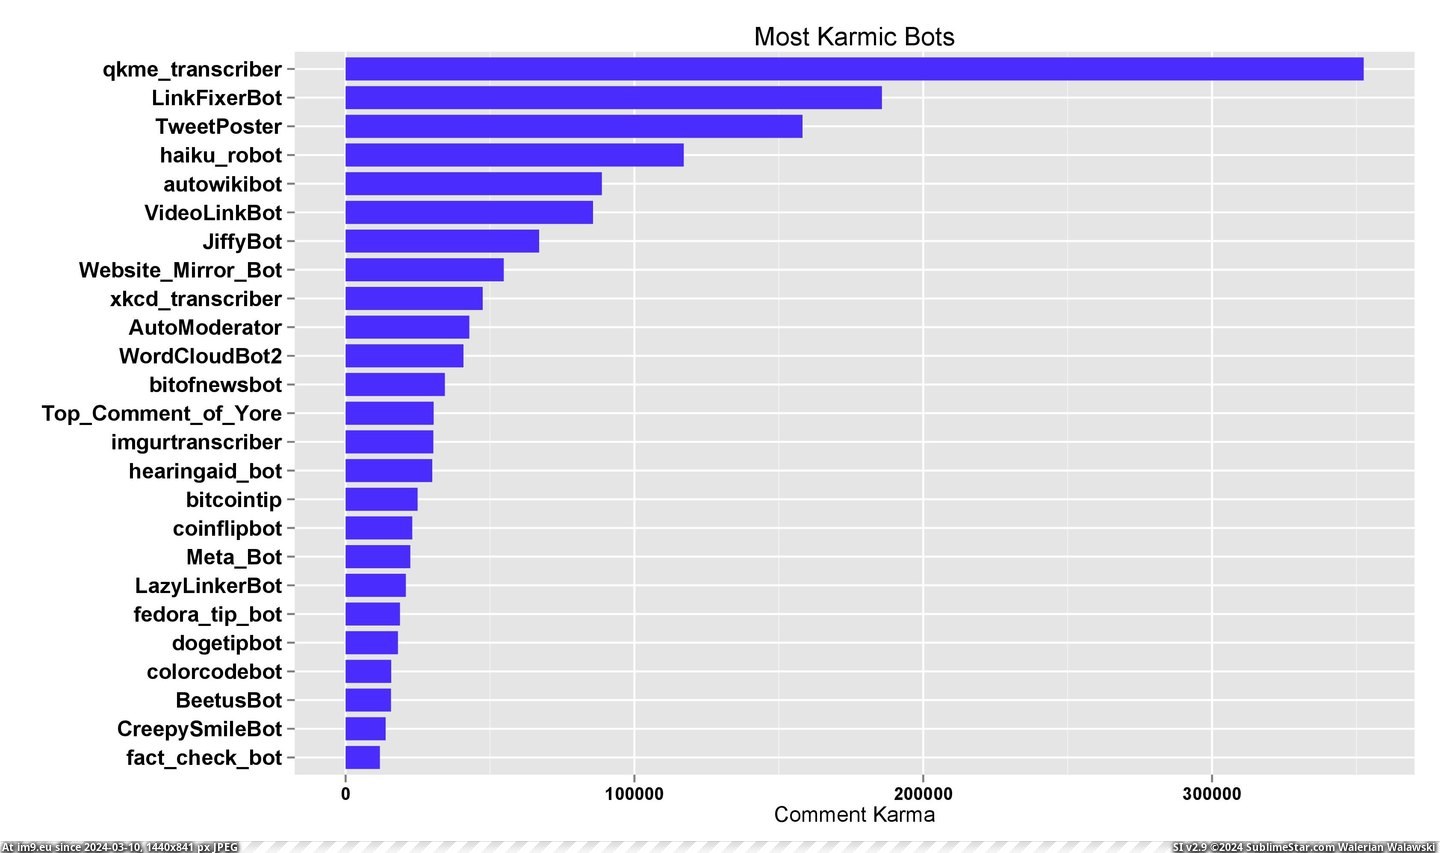 #Quality #Bots #Karmic #Higher [Dataisbeautiful] [OC] Most Karmic Reddit Bots - Higher quality 1 Pic. (Bild von album My r/DATAISBEAUTIFUL favs))